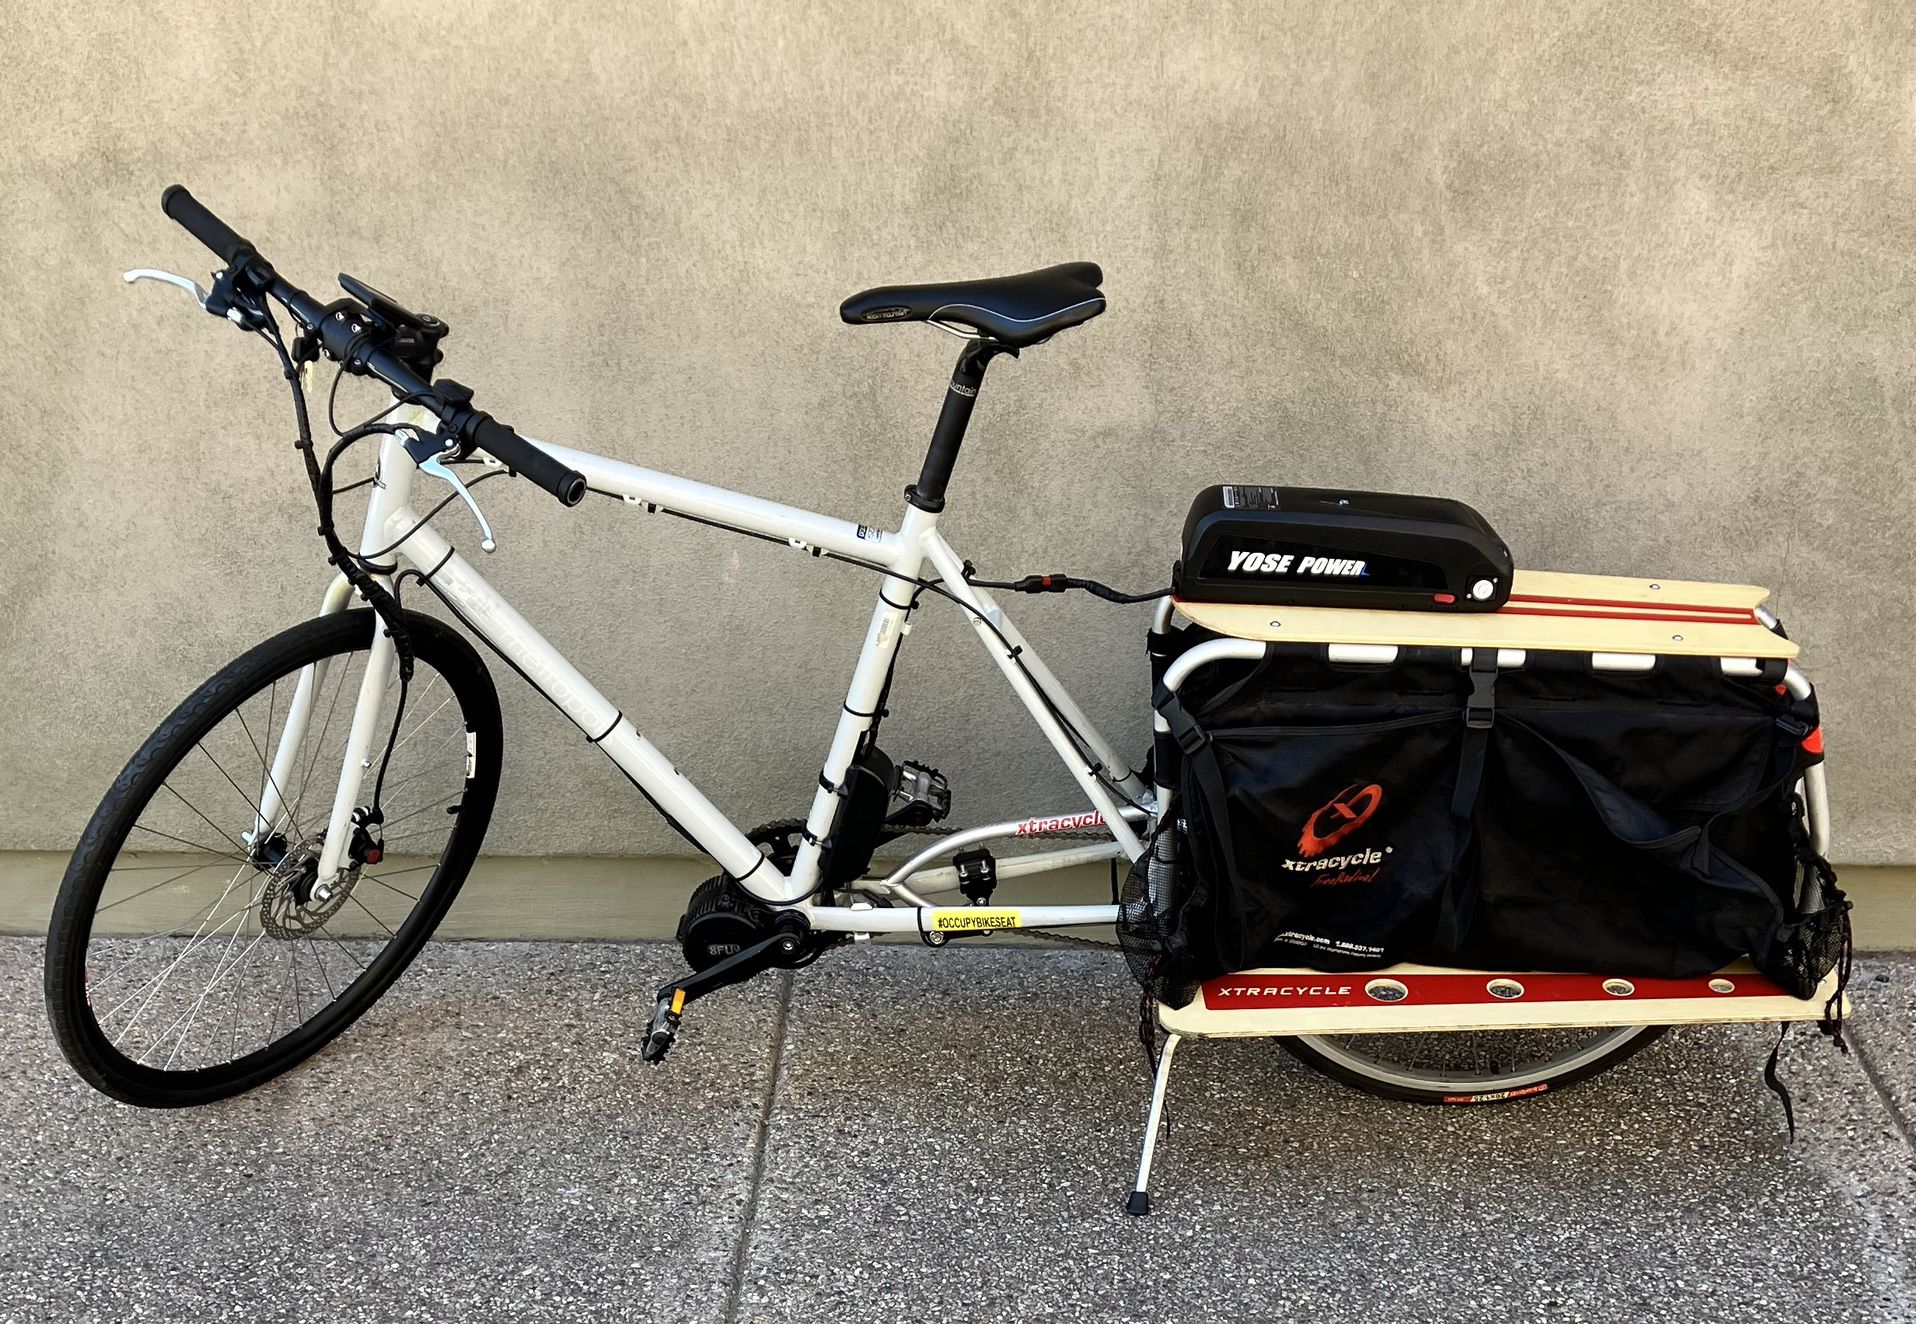 E-bike With Cargo Bike Attachment - XL size 